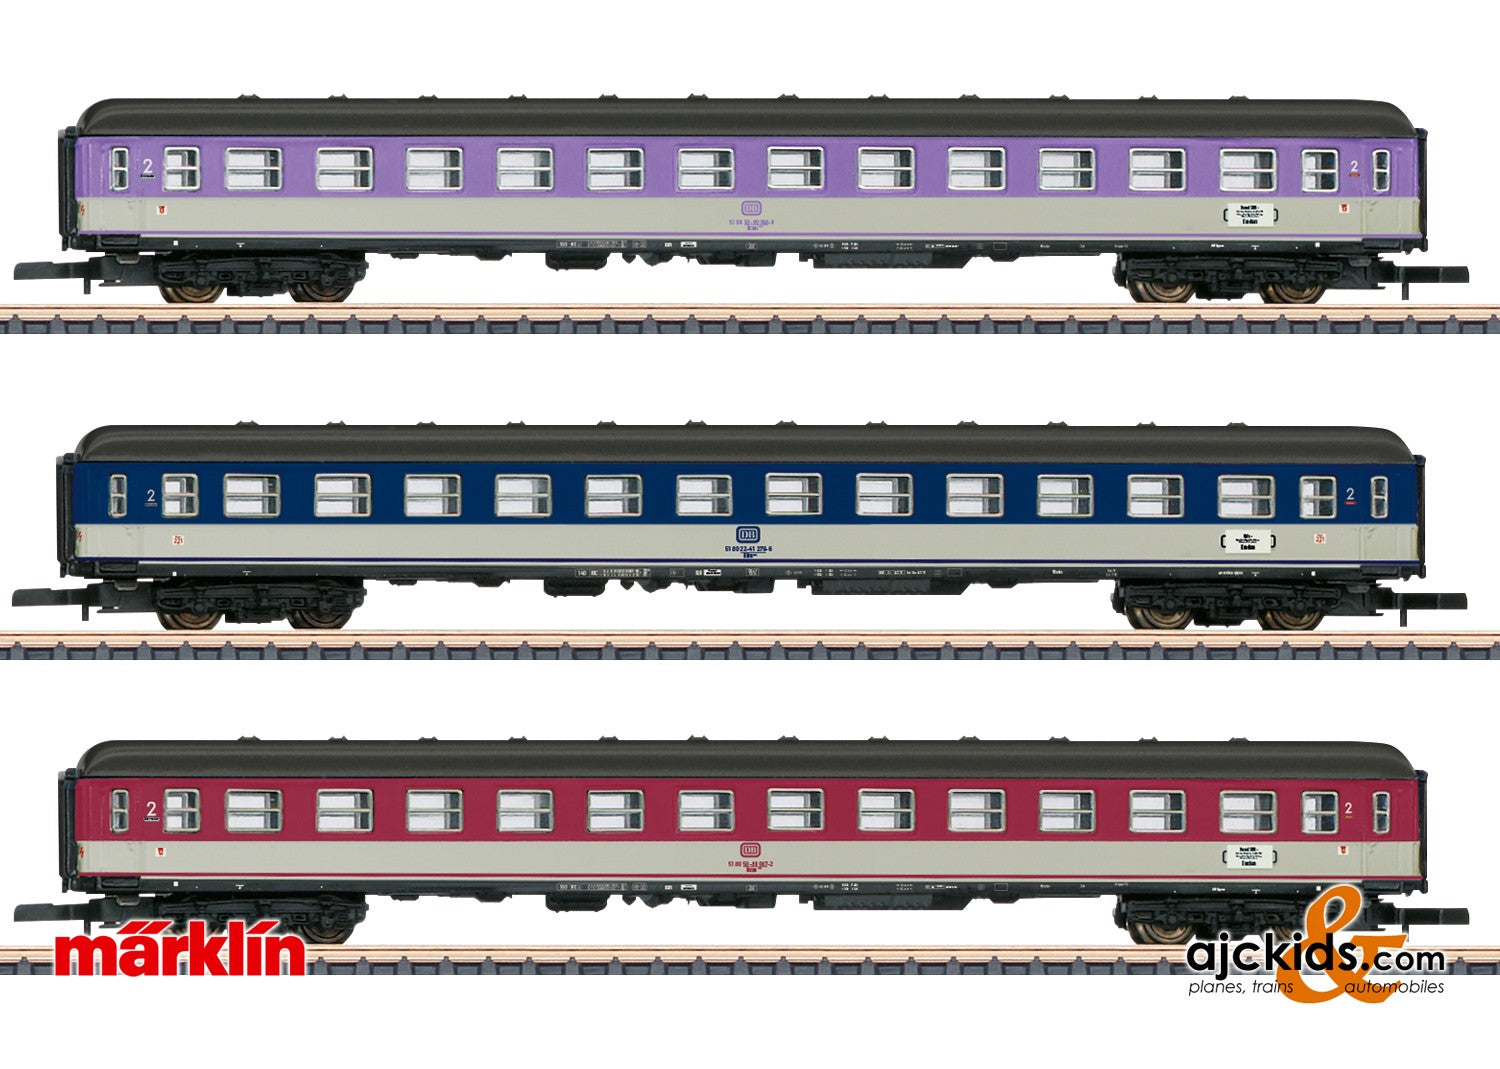 Marklin 87402 - Pop Cars Express Train Passenger Car Set, EAN 4001883874029 at Ajckids.com